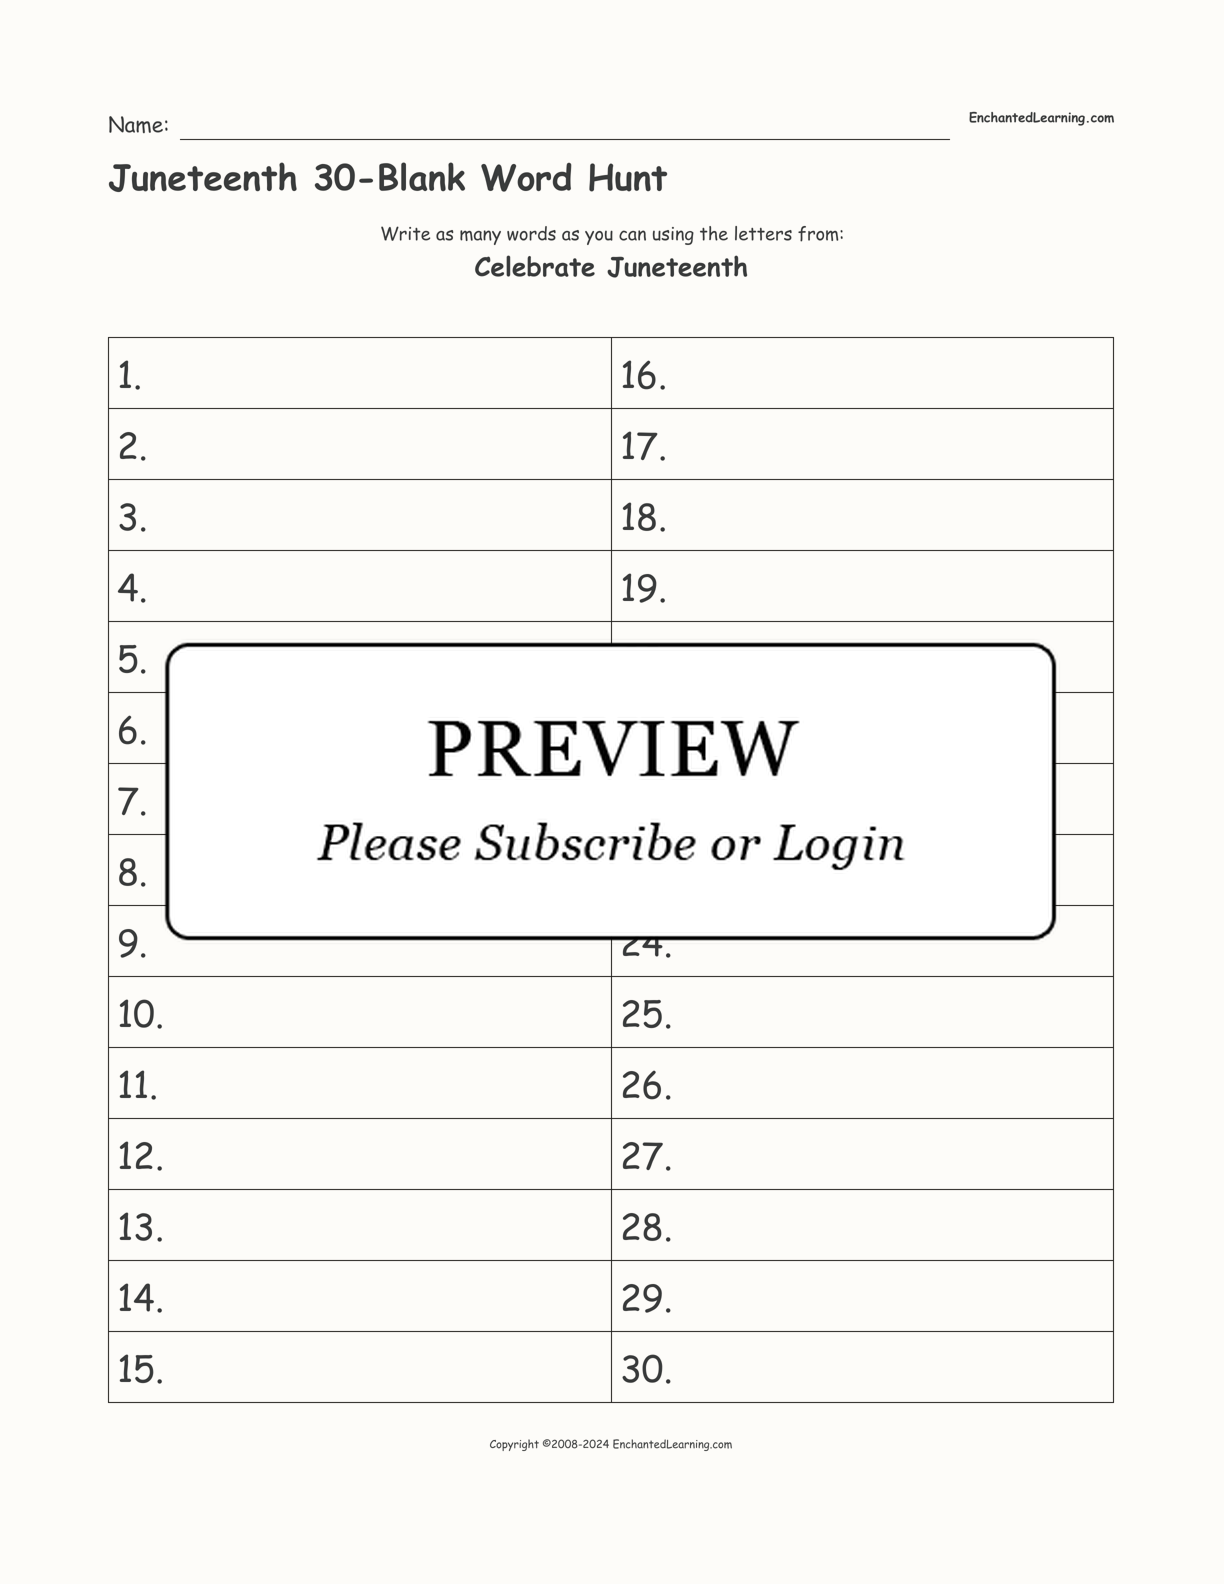 Juneteenth 30-Blank Word Hunt interactive worksheet page 1